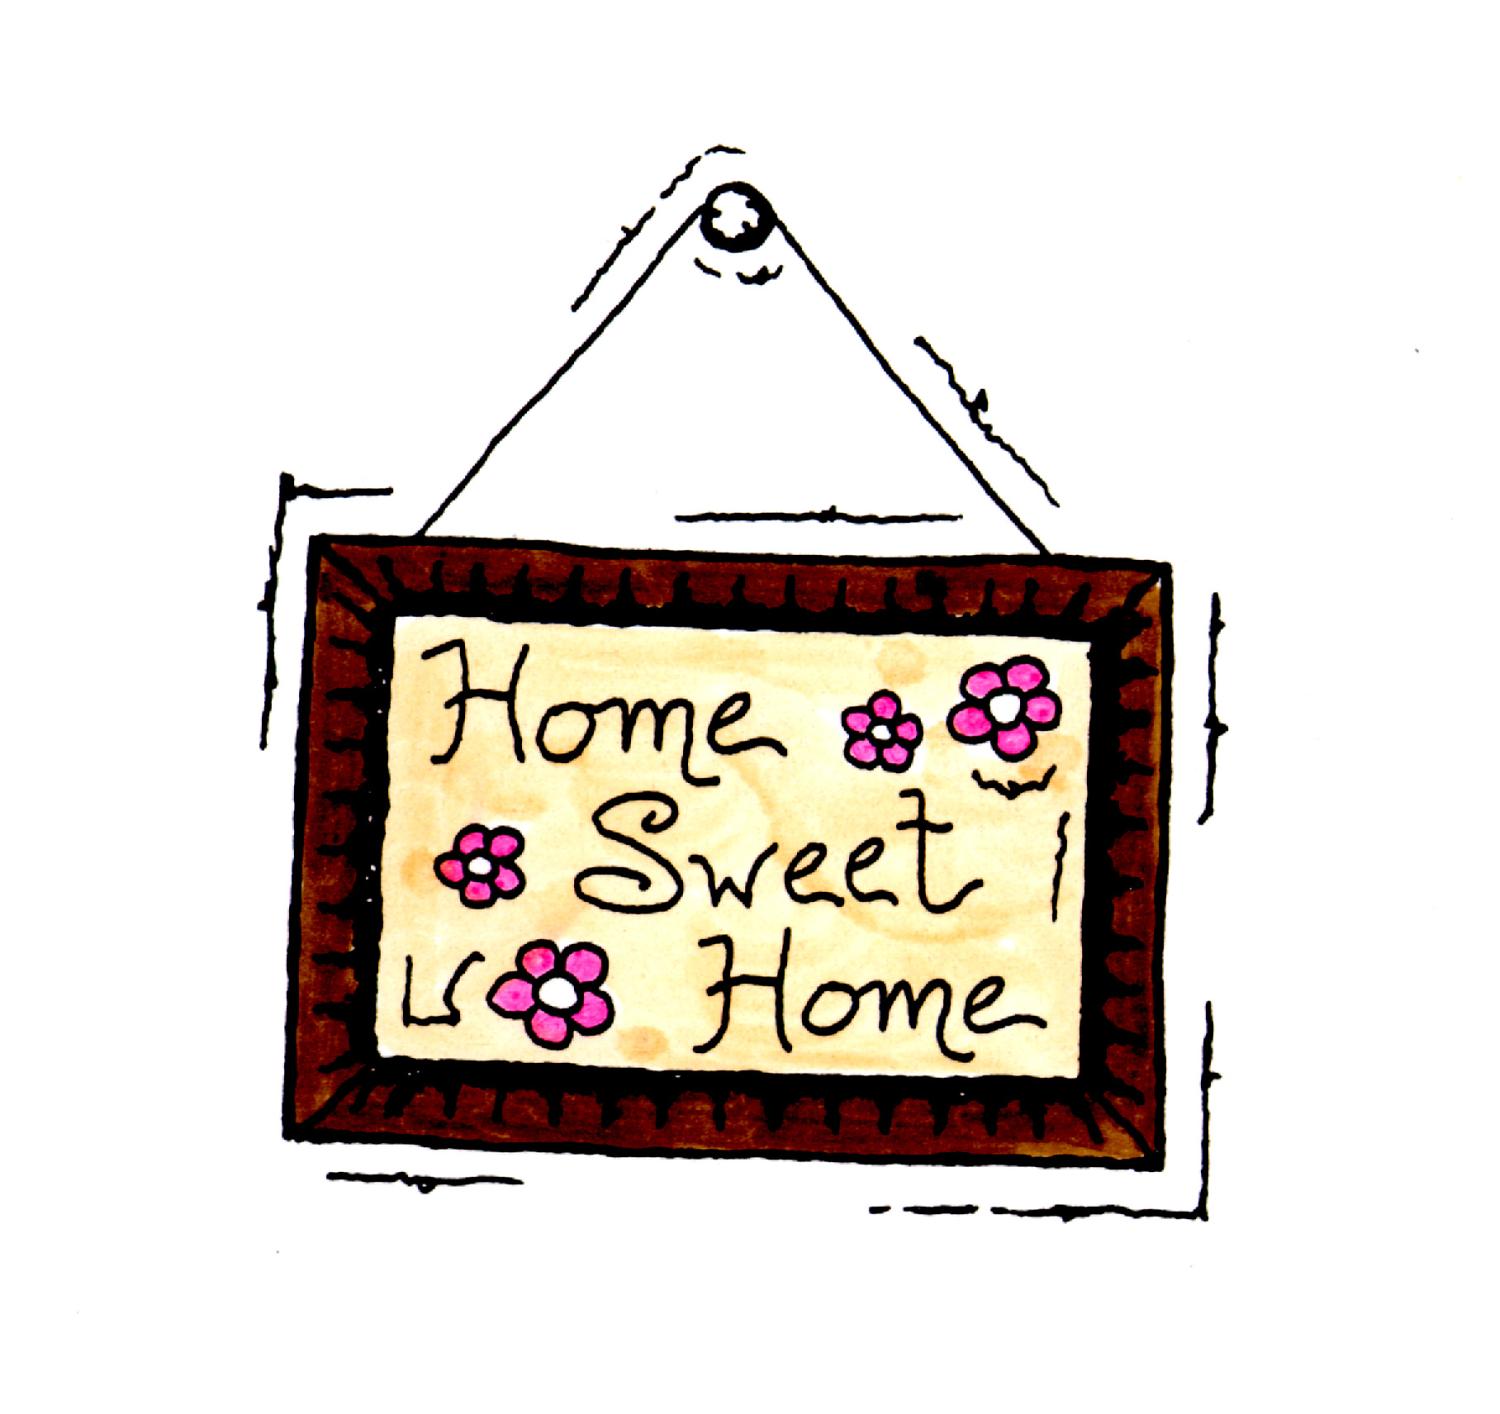 Ncis Wallpaper - Clip Art Home Sweet Home Sign - HD Wallpaper 